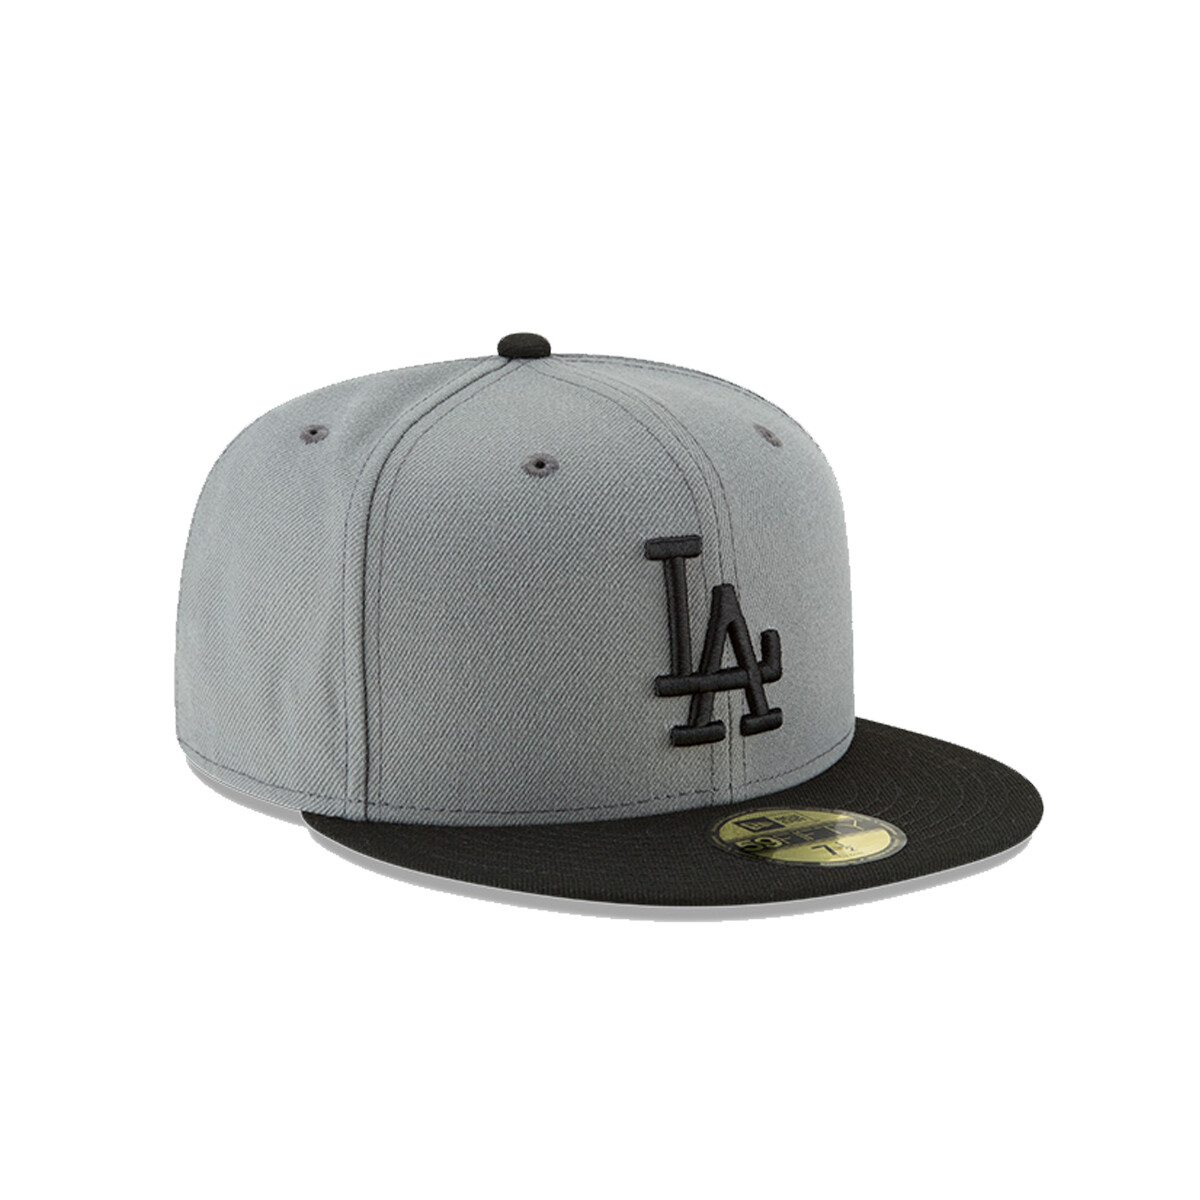 Gorro New Era - Los Angeles Dodgers MLB 59Fifty - 11591140 - GREY/BLACK 